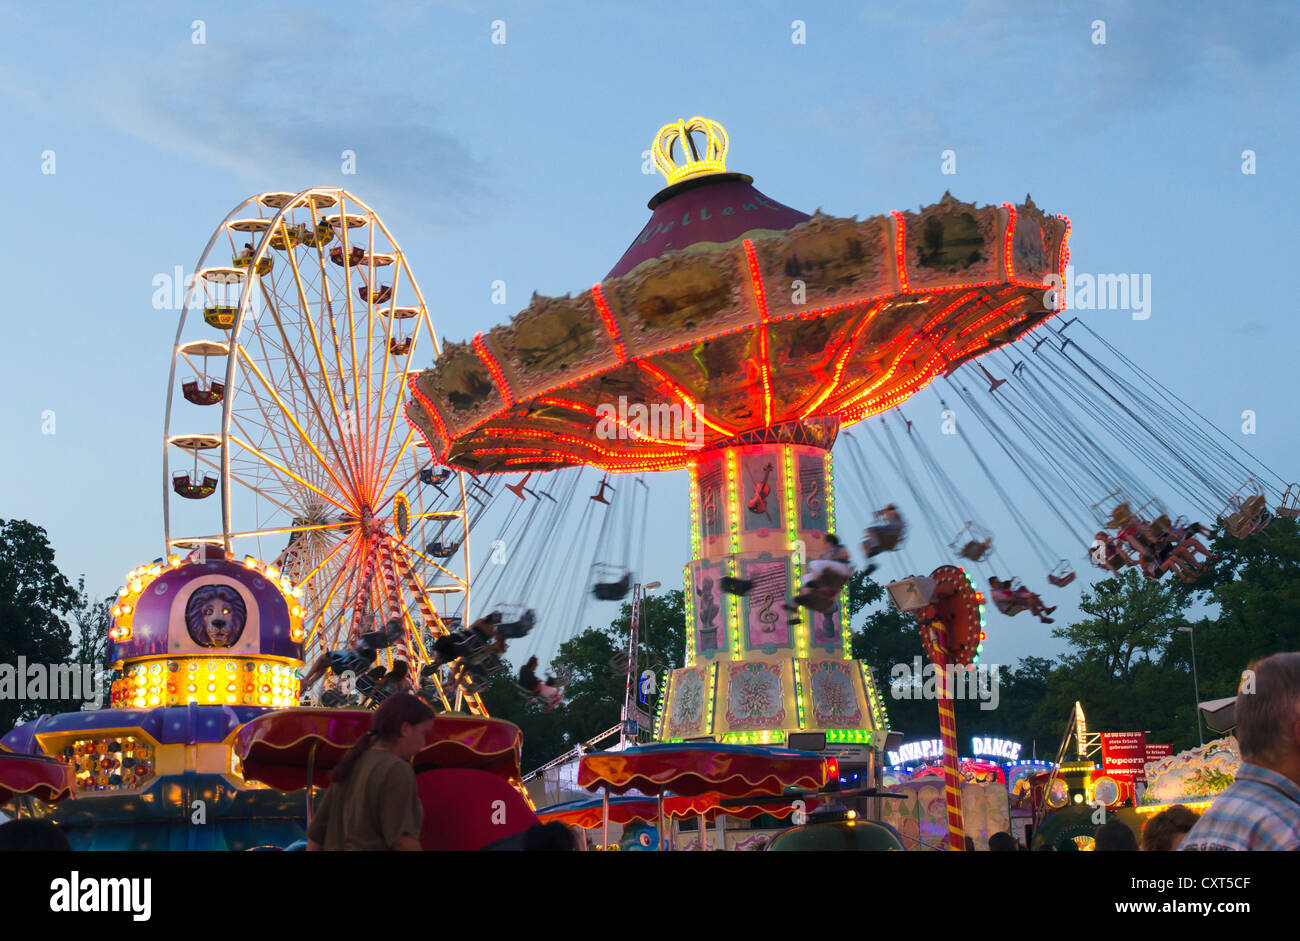 Swing caroussel and Ferris wheel at the Dult fun fair, Landshut, Bavaria, Germany, Europe Stock Photo